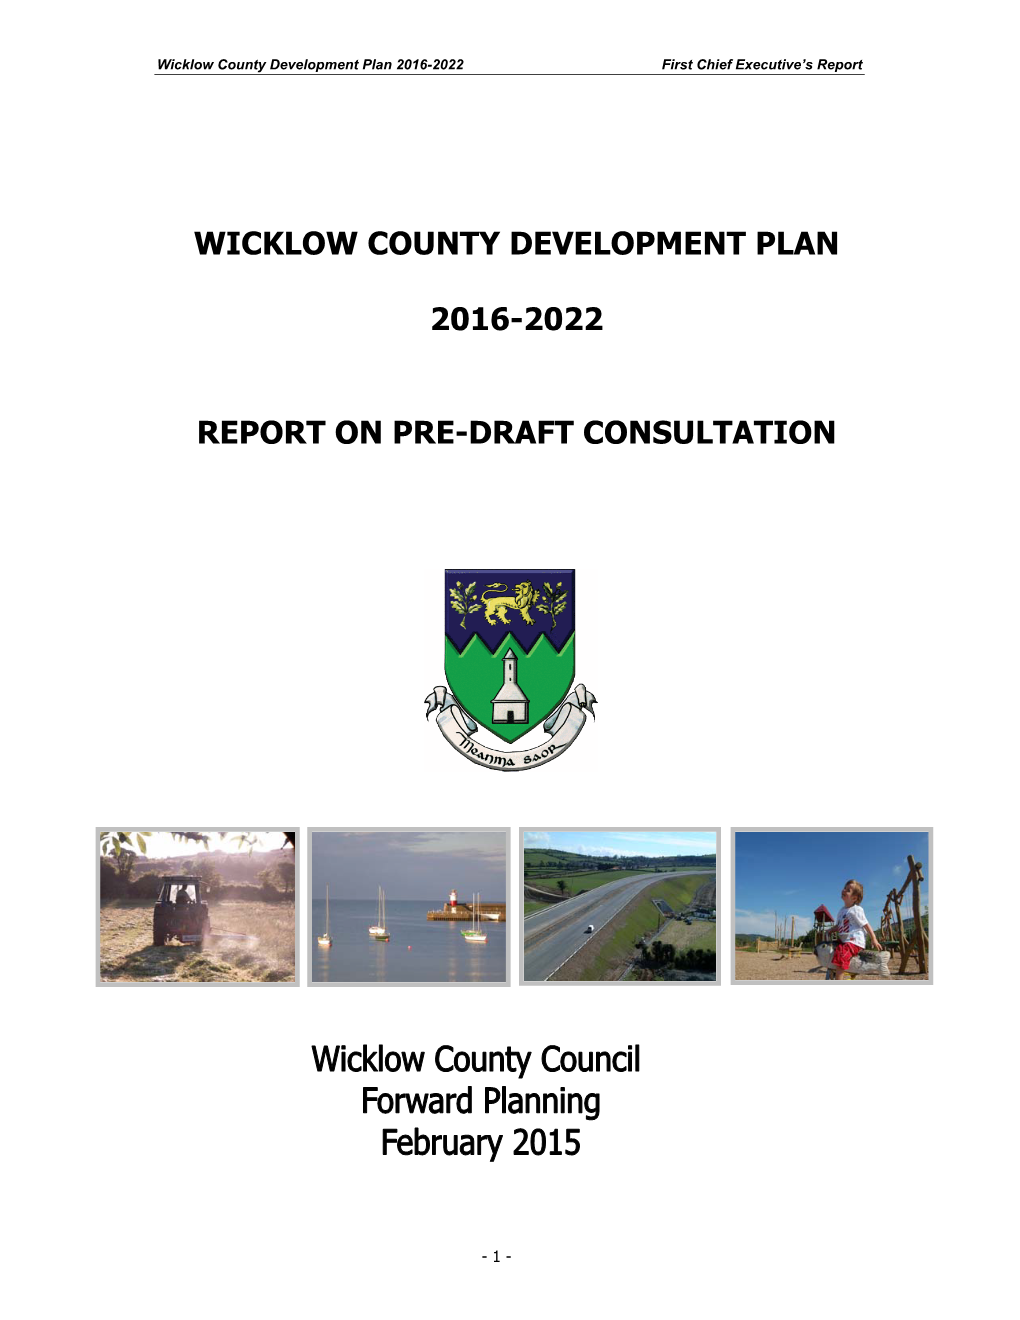 Wicklow County Development Plan 2016-2022 Report on Pre-Draft Consultation